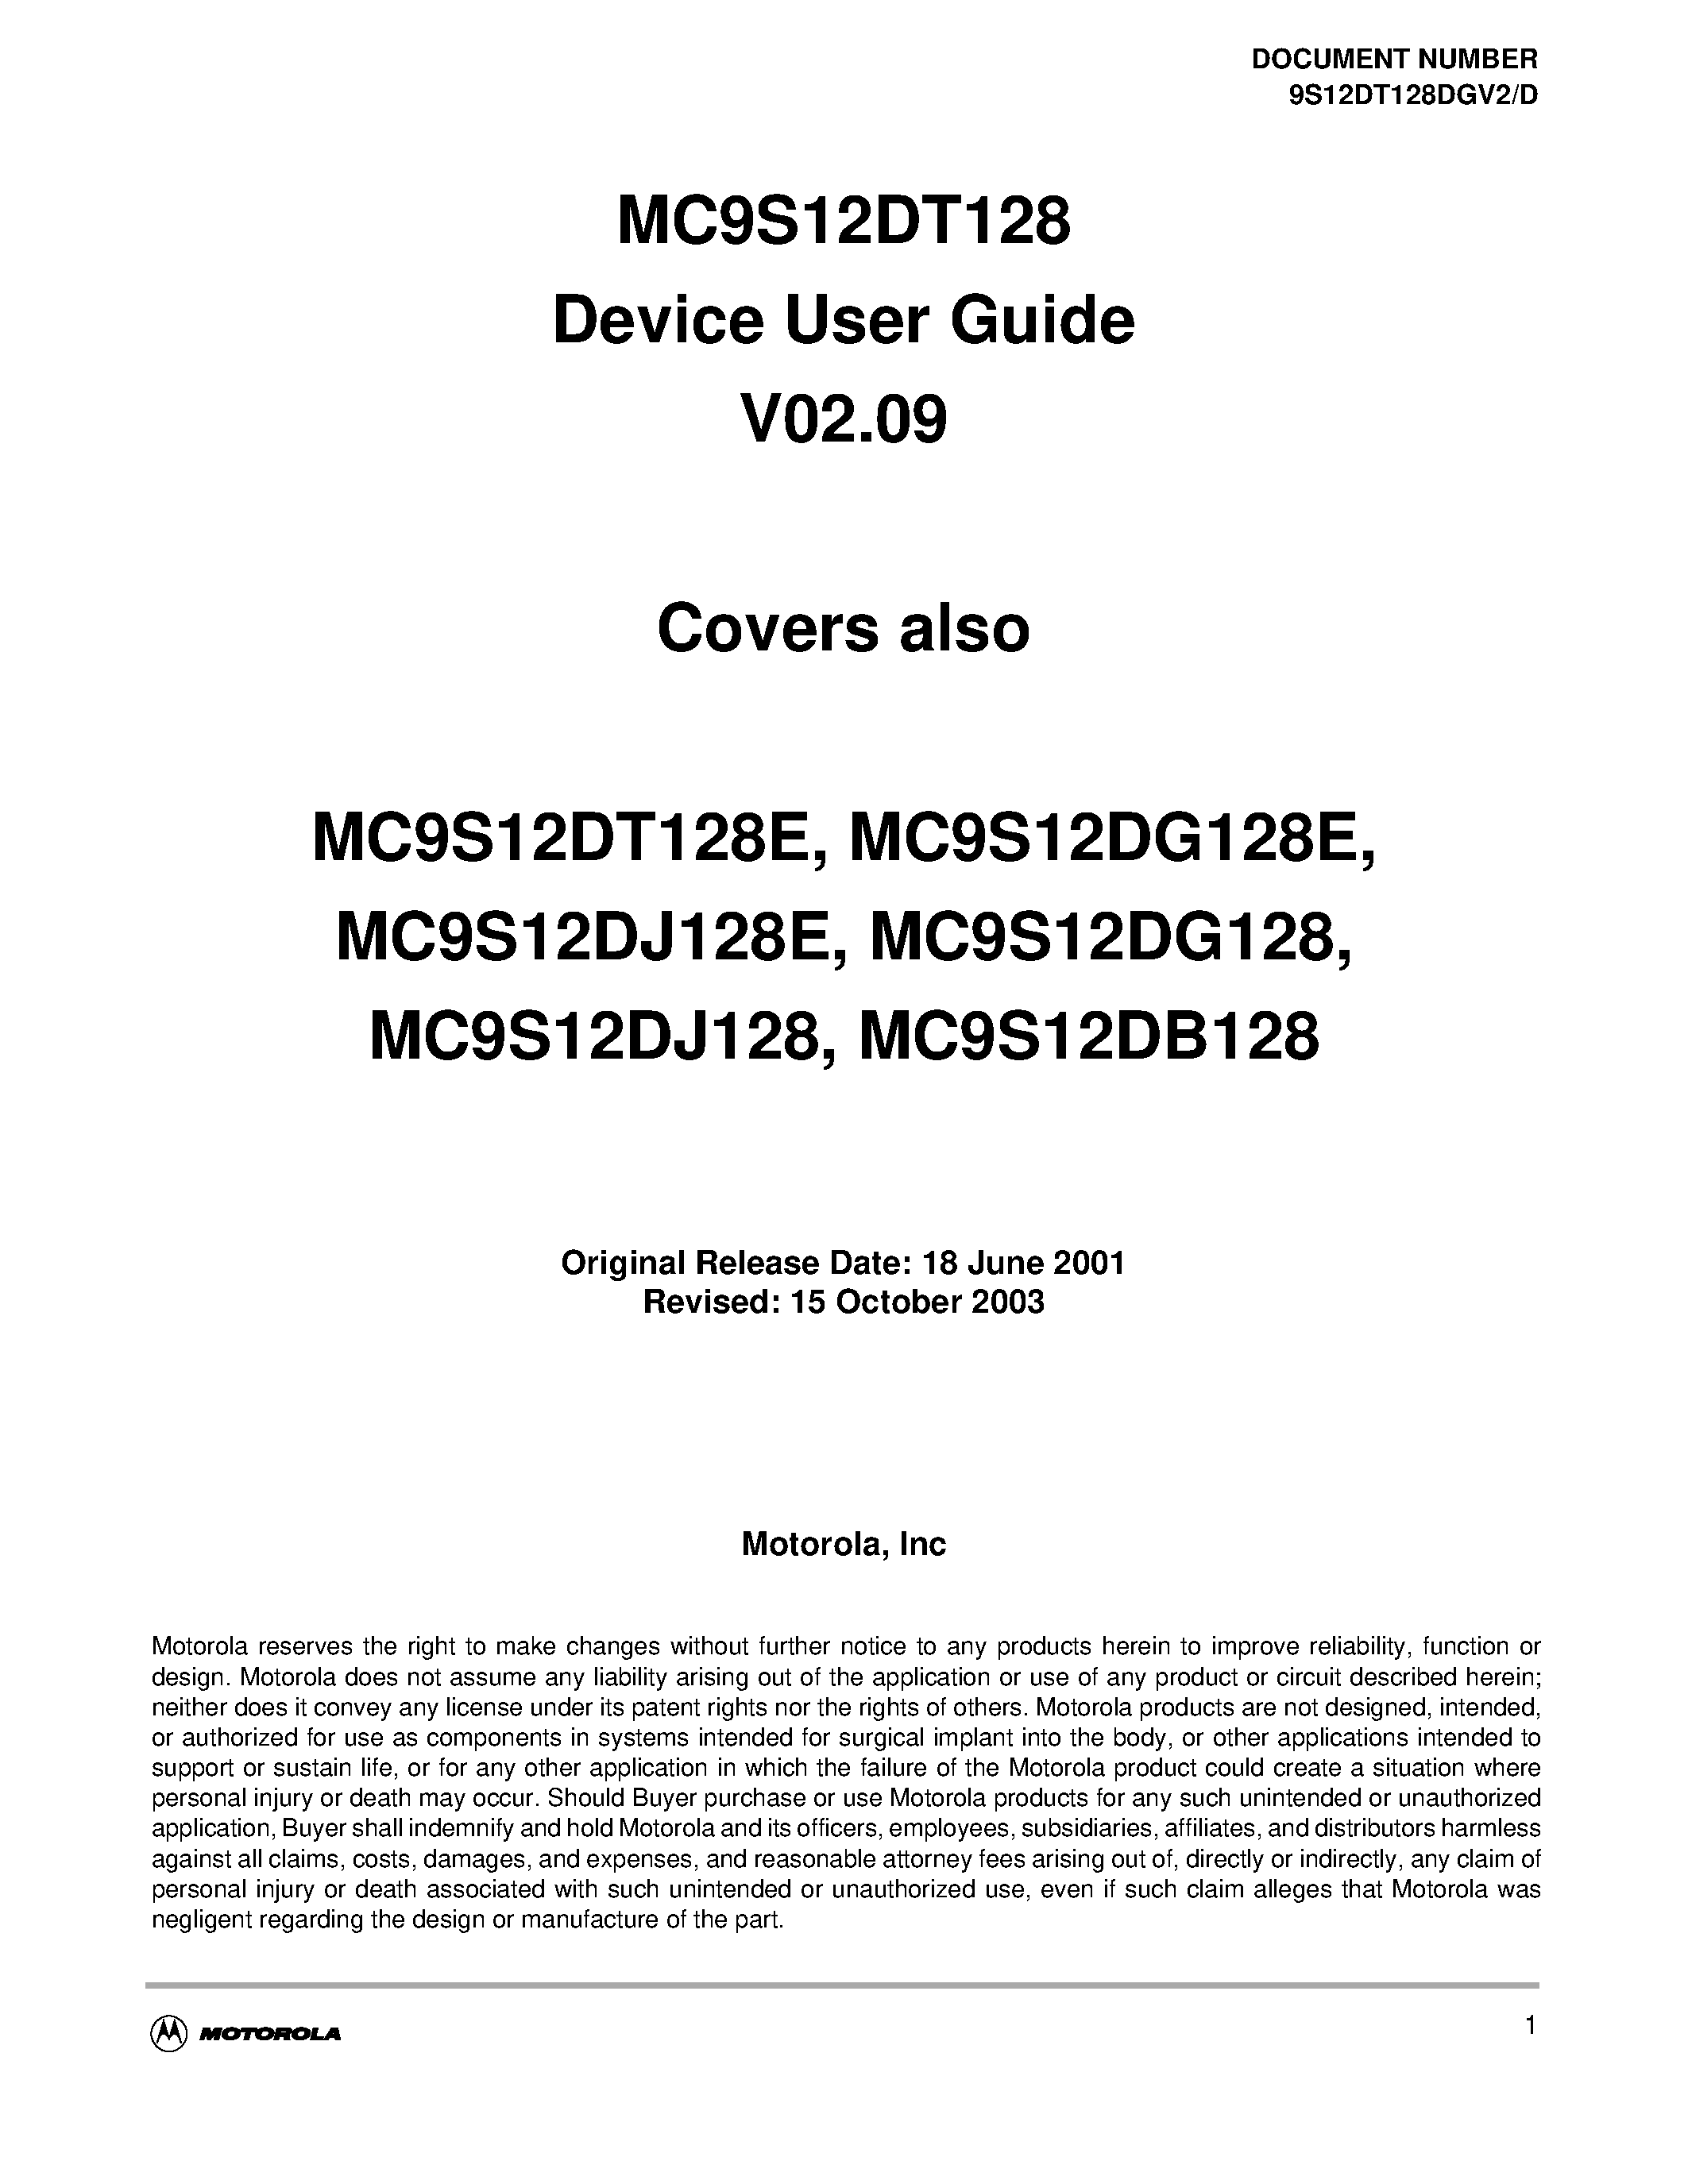 Datasheet S12IICV2 - MC9S12DT128 Device User Guide V02.09 page 1